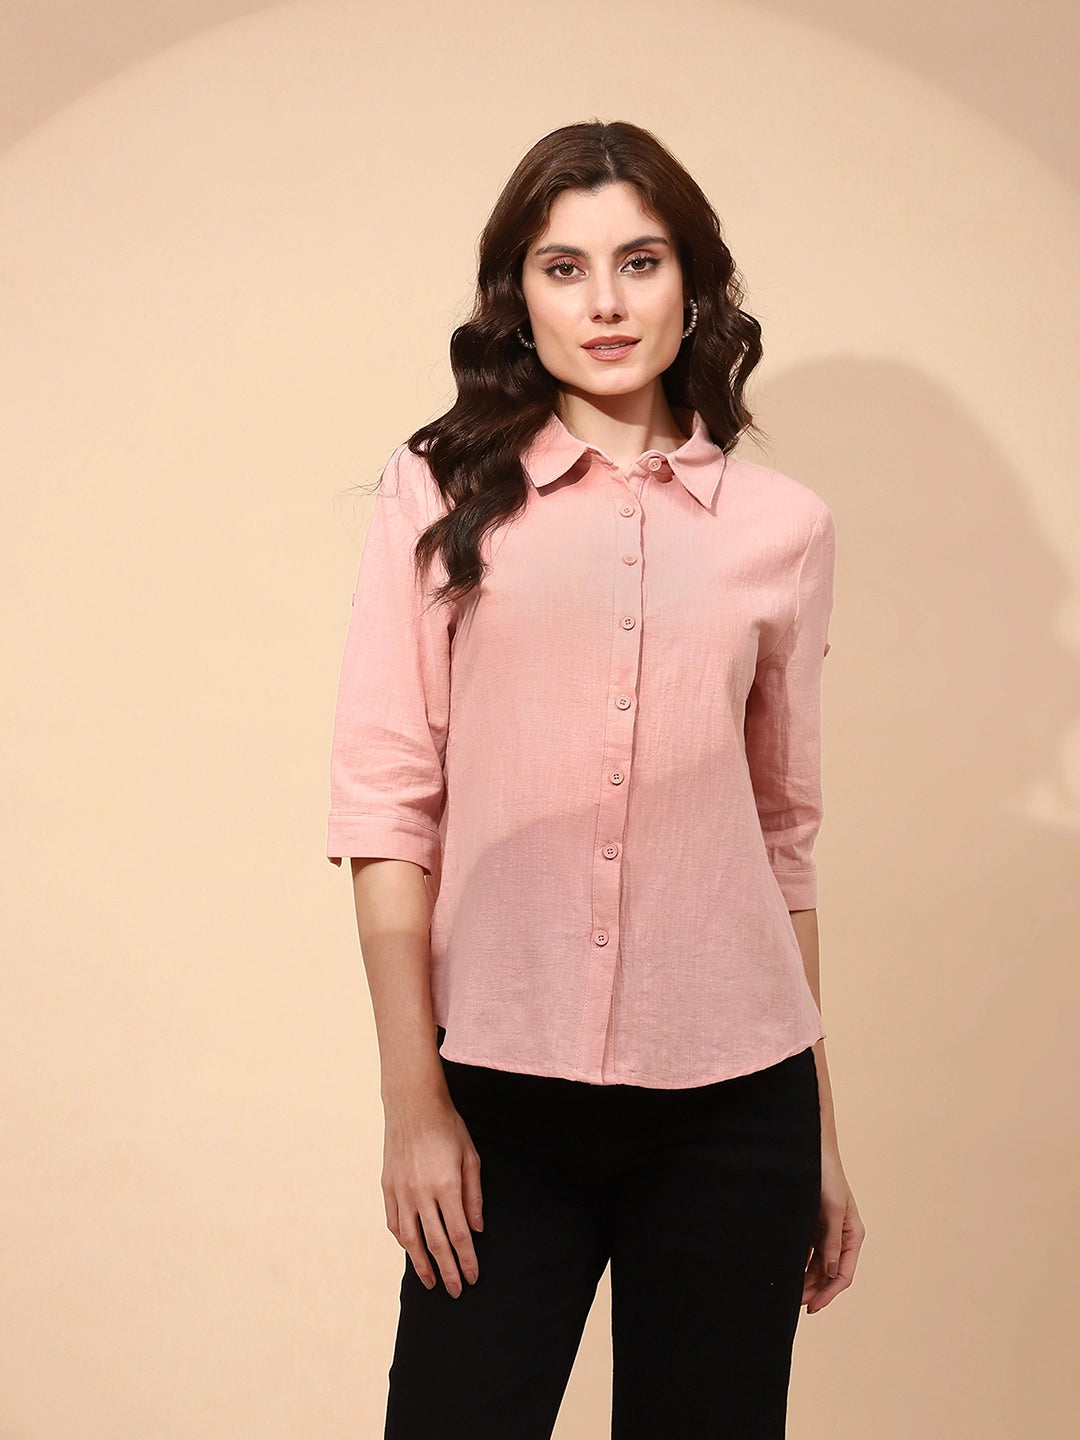 Dusty Rose Pink Cotton Regular Fit Shirt For Women